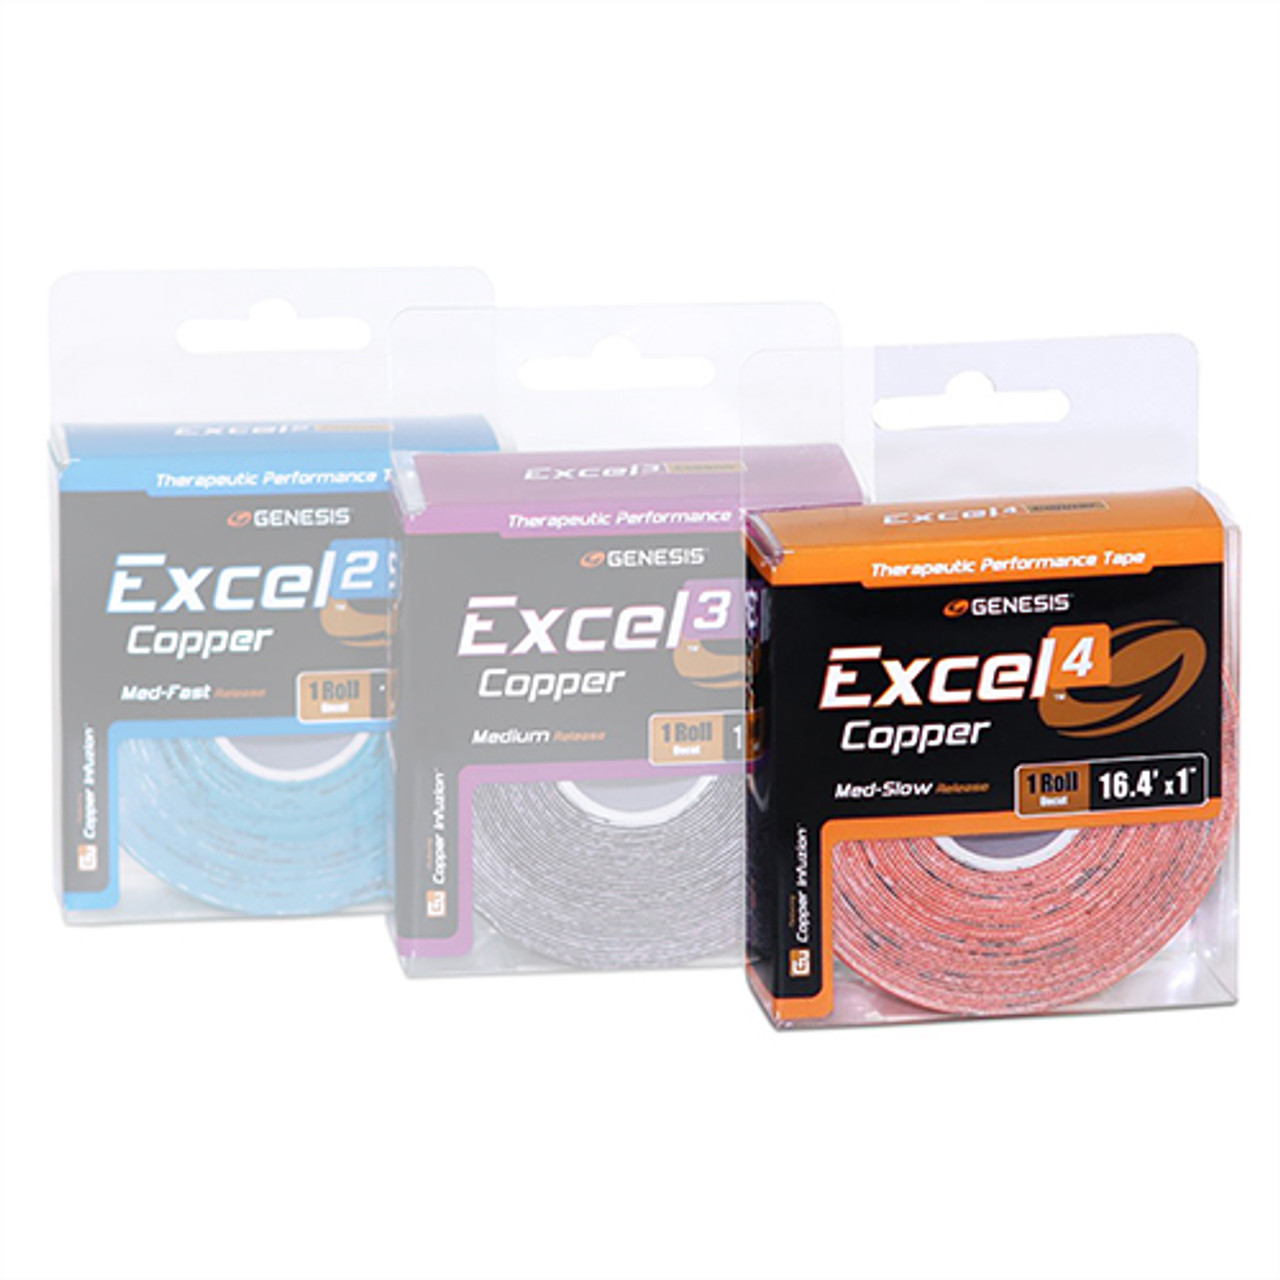 Genesis Excel Copper 4 Performance Tape Orange Roll